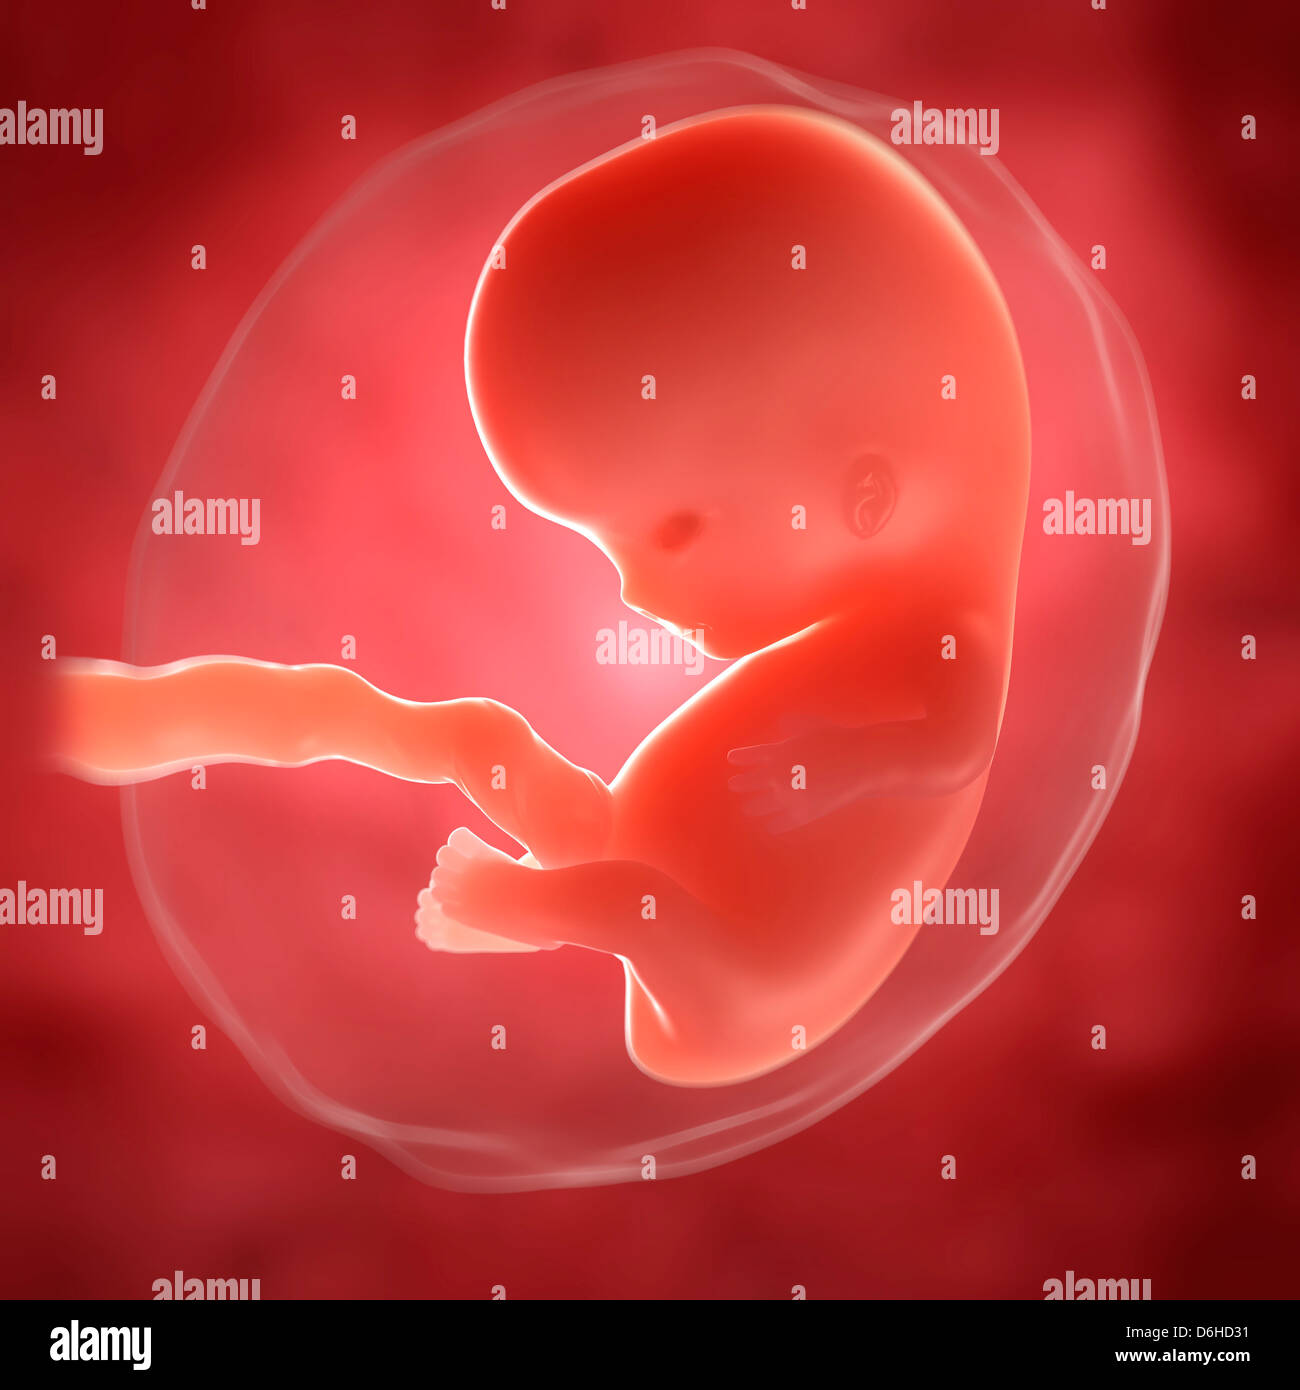 Foetus at 8 weeks, artwork Stock Photo